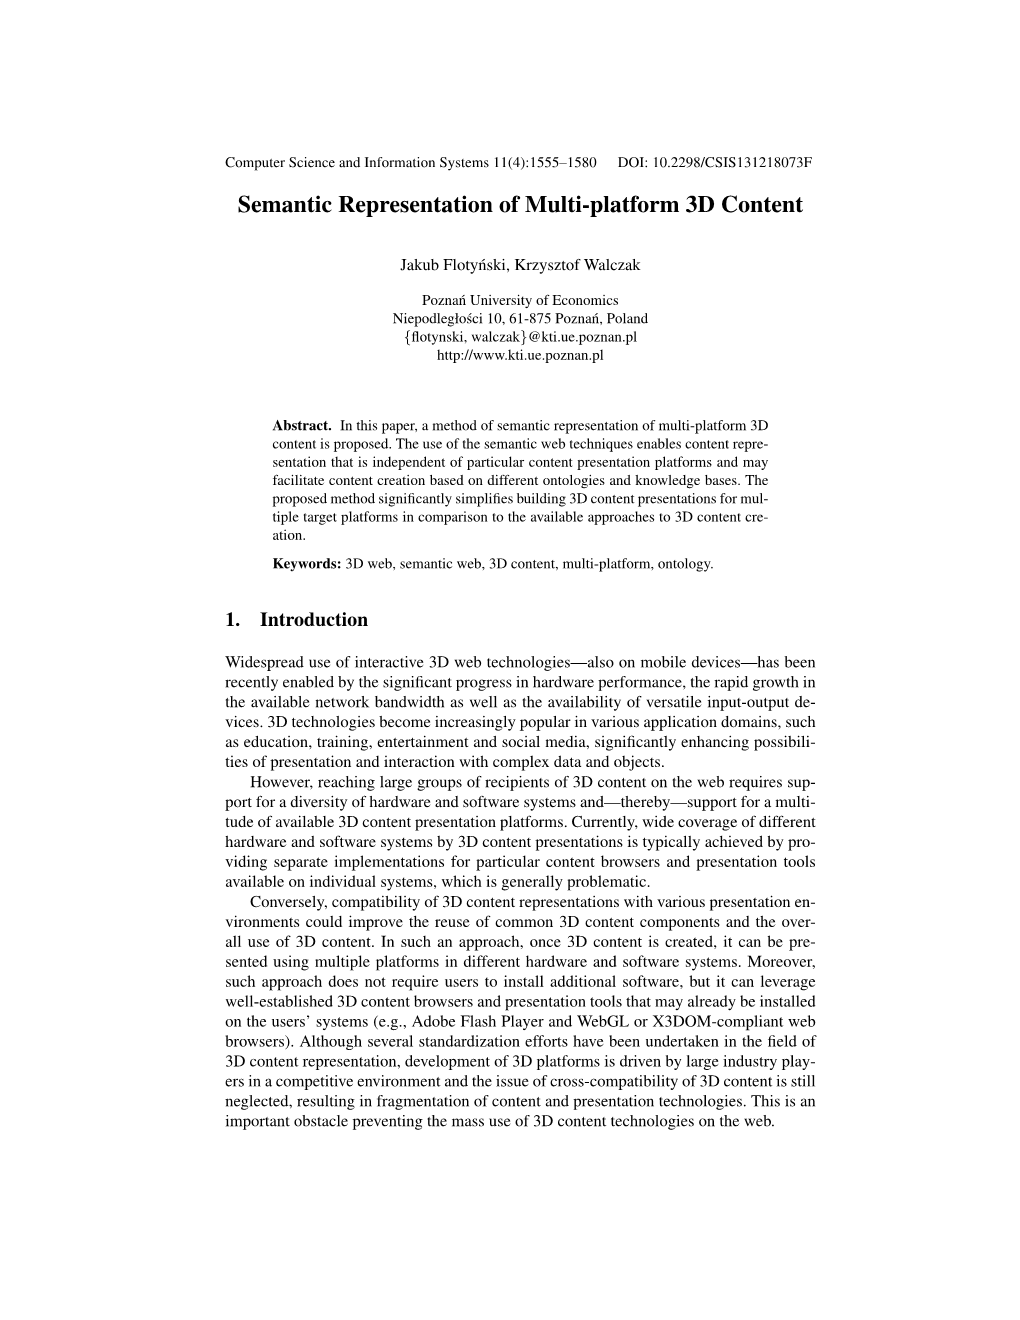 Semantic Representation of Multi-Platform 3D Content